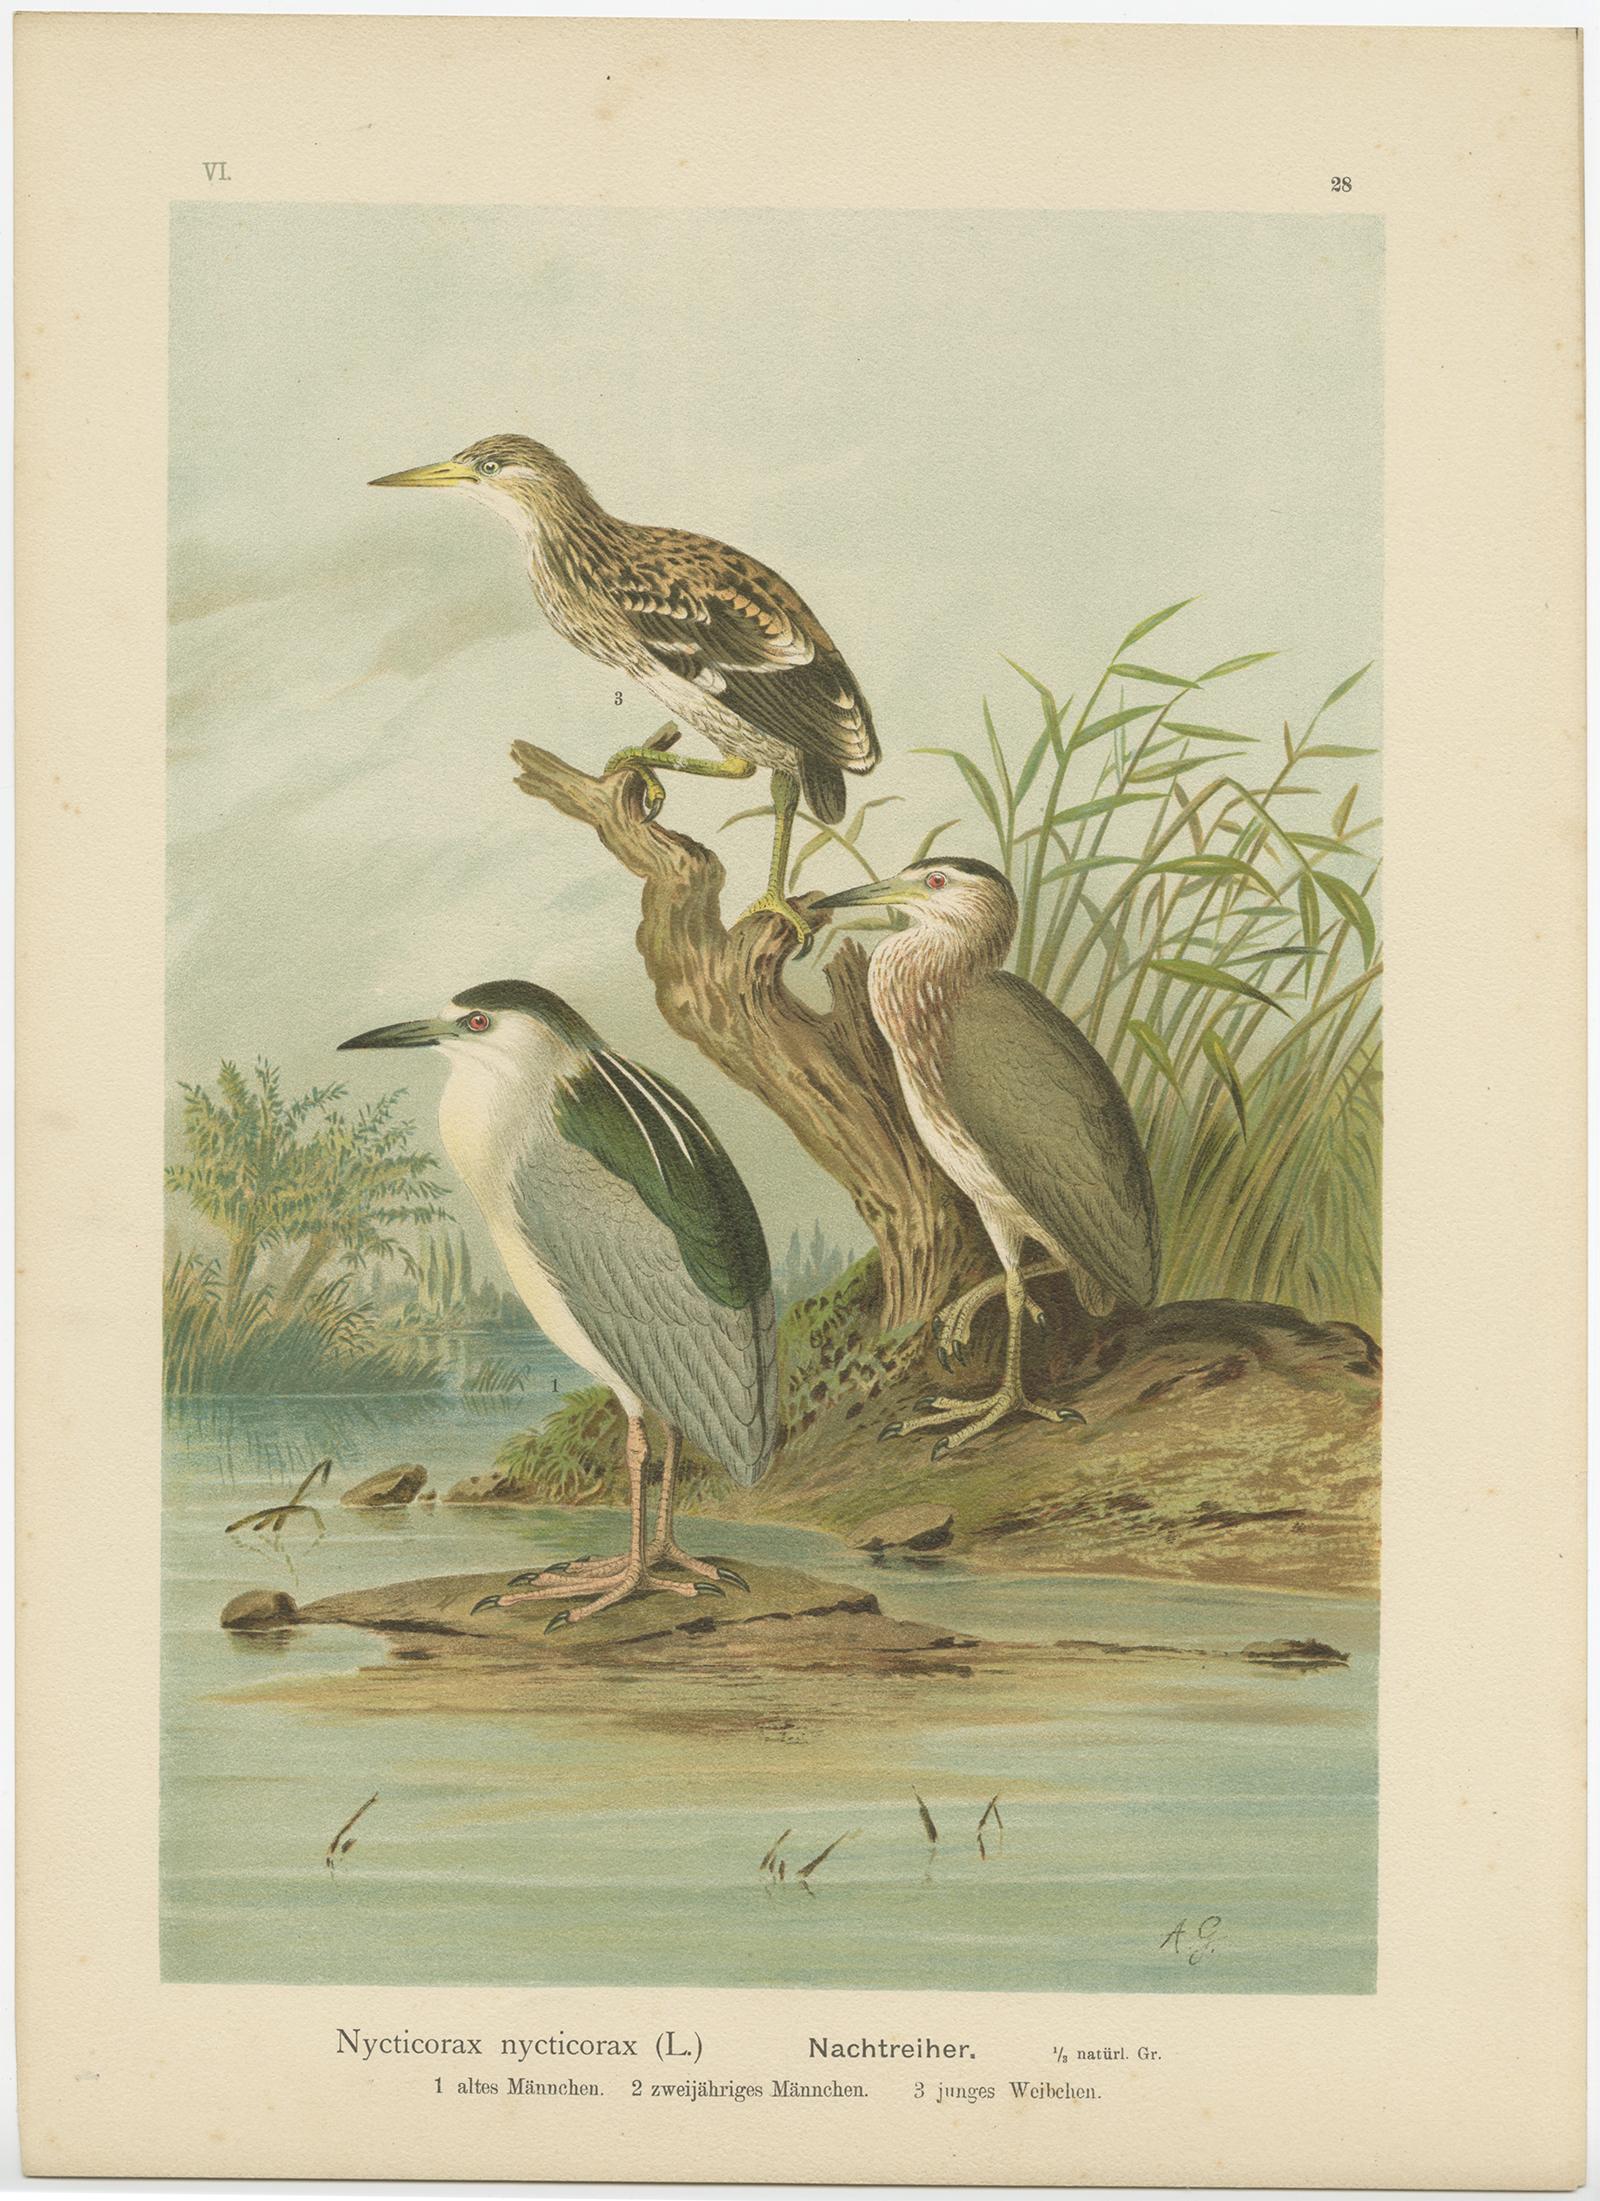 Antique bird print titled 'Nycticorax nycticorax - Nachtreiher'. Chromolithograph of the Black-crowned night heron. This print originates from J.A. Naumann's 'Naturgeschichte der Vögel Mitteleuropas', published, circa 1895.